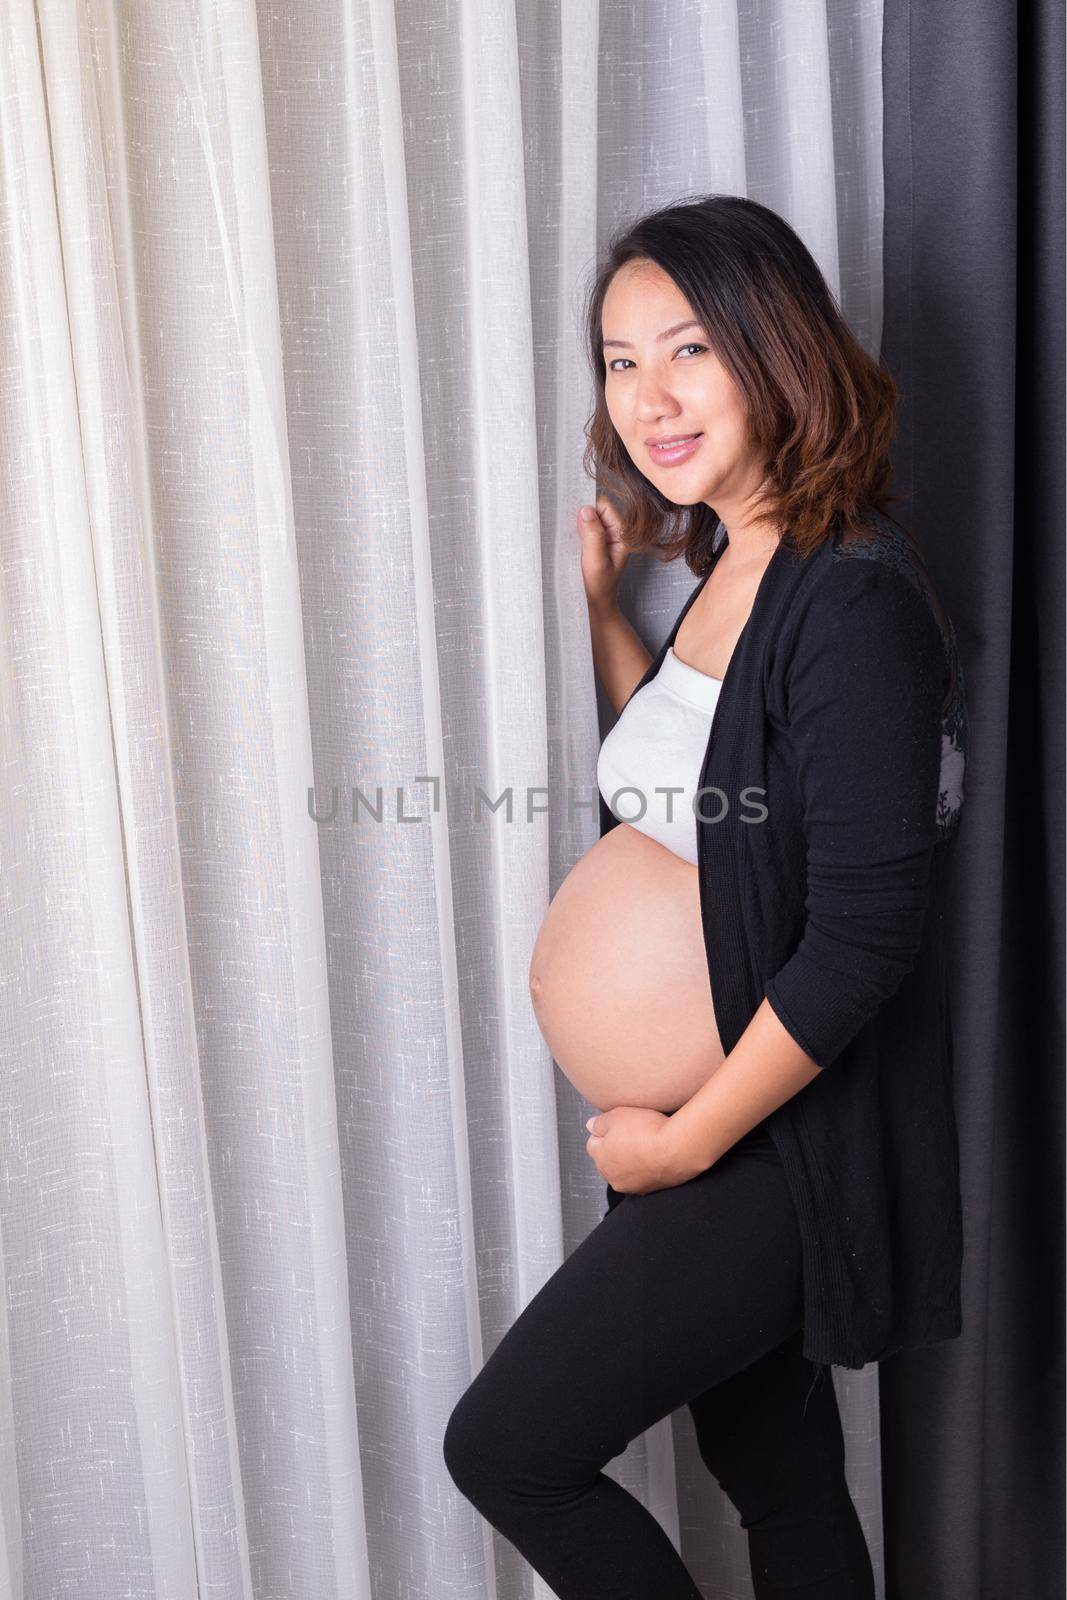 Pregnant woman standing near window  by geargodz